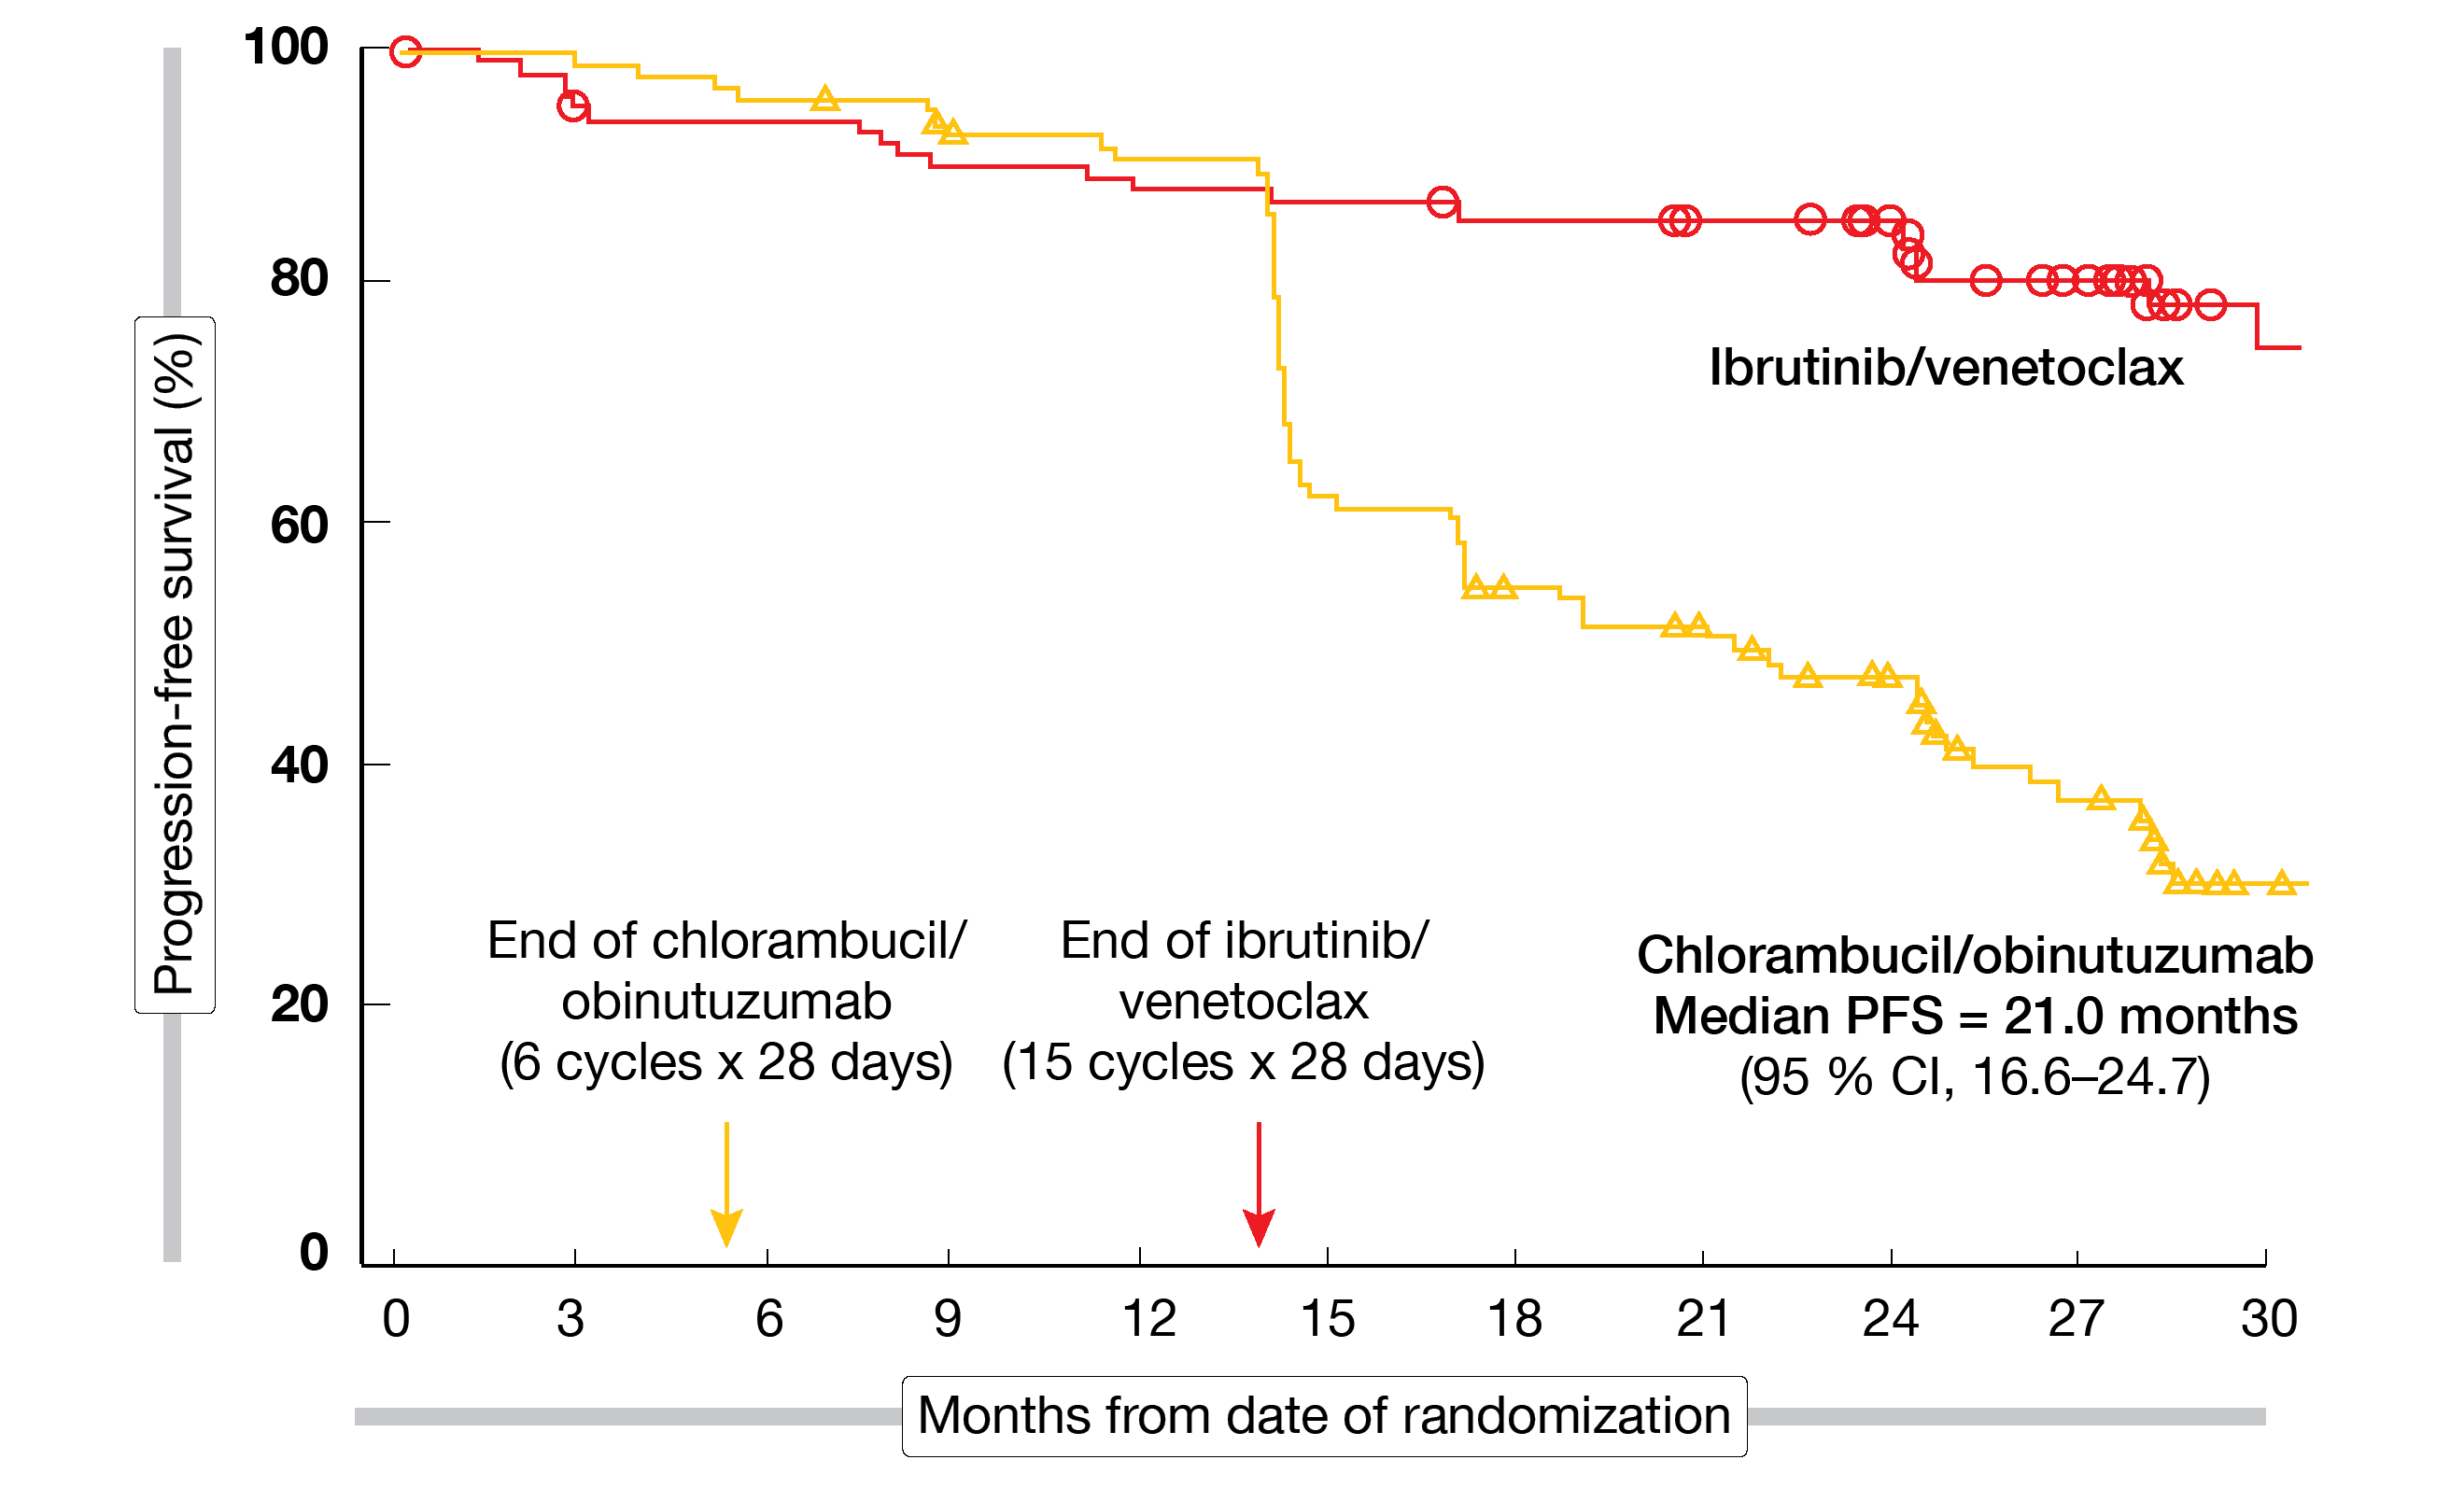 Figure 2: Progression-free survival advantage for ibrutinib/venetoclax vs. chlorambucil/obinutuzumab in older and comorbid patients treated in GLOW